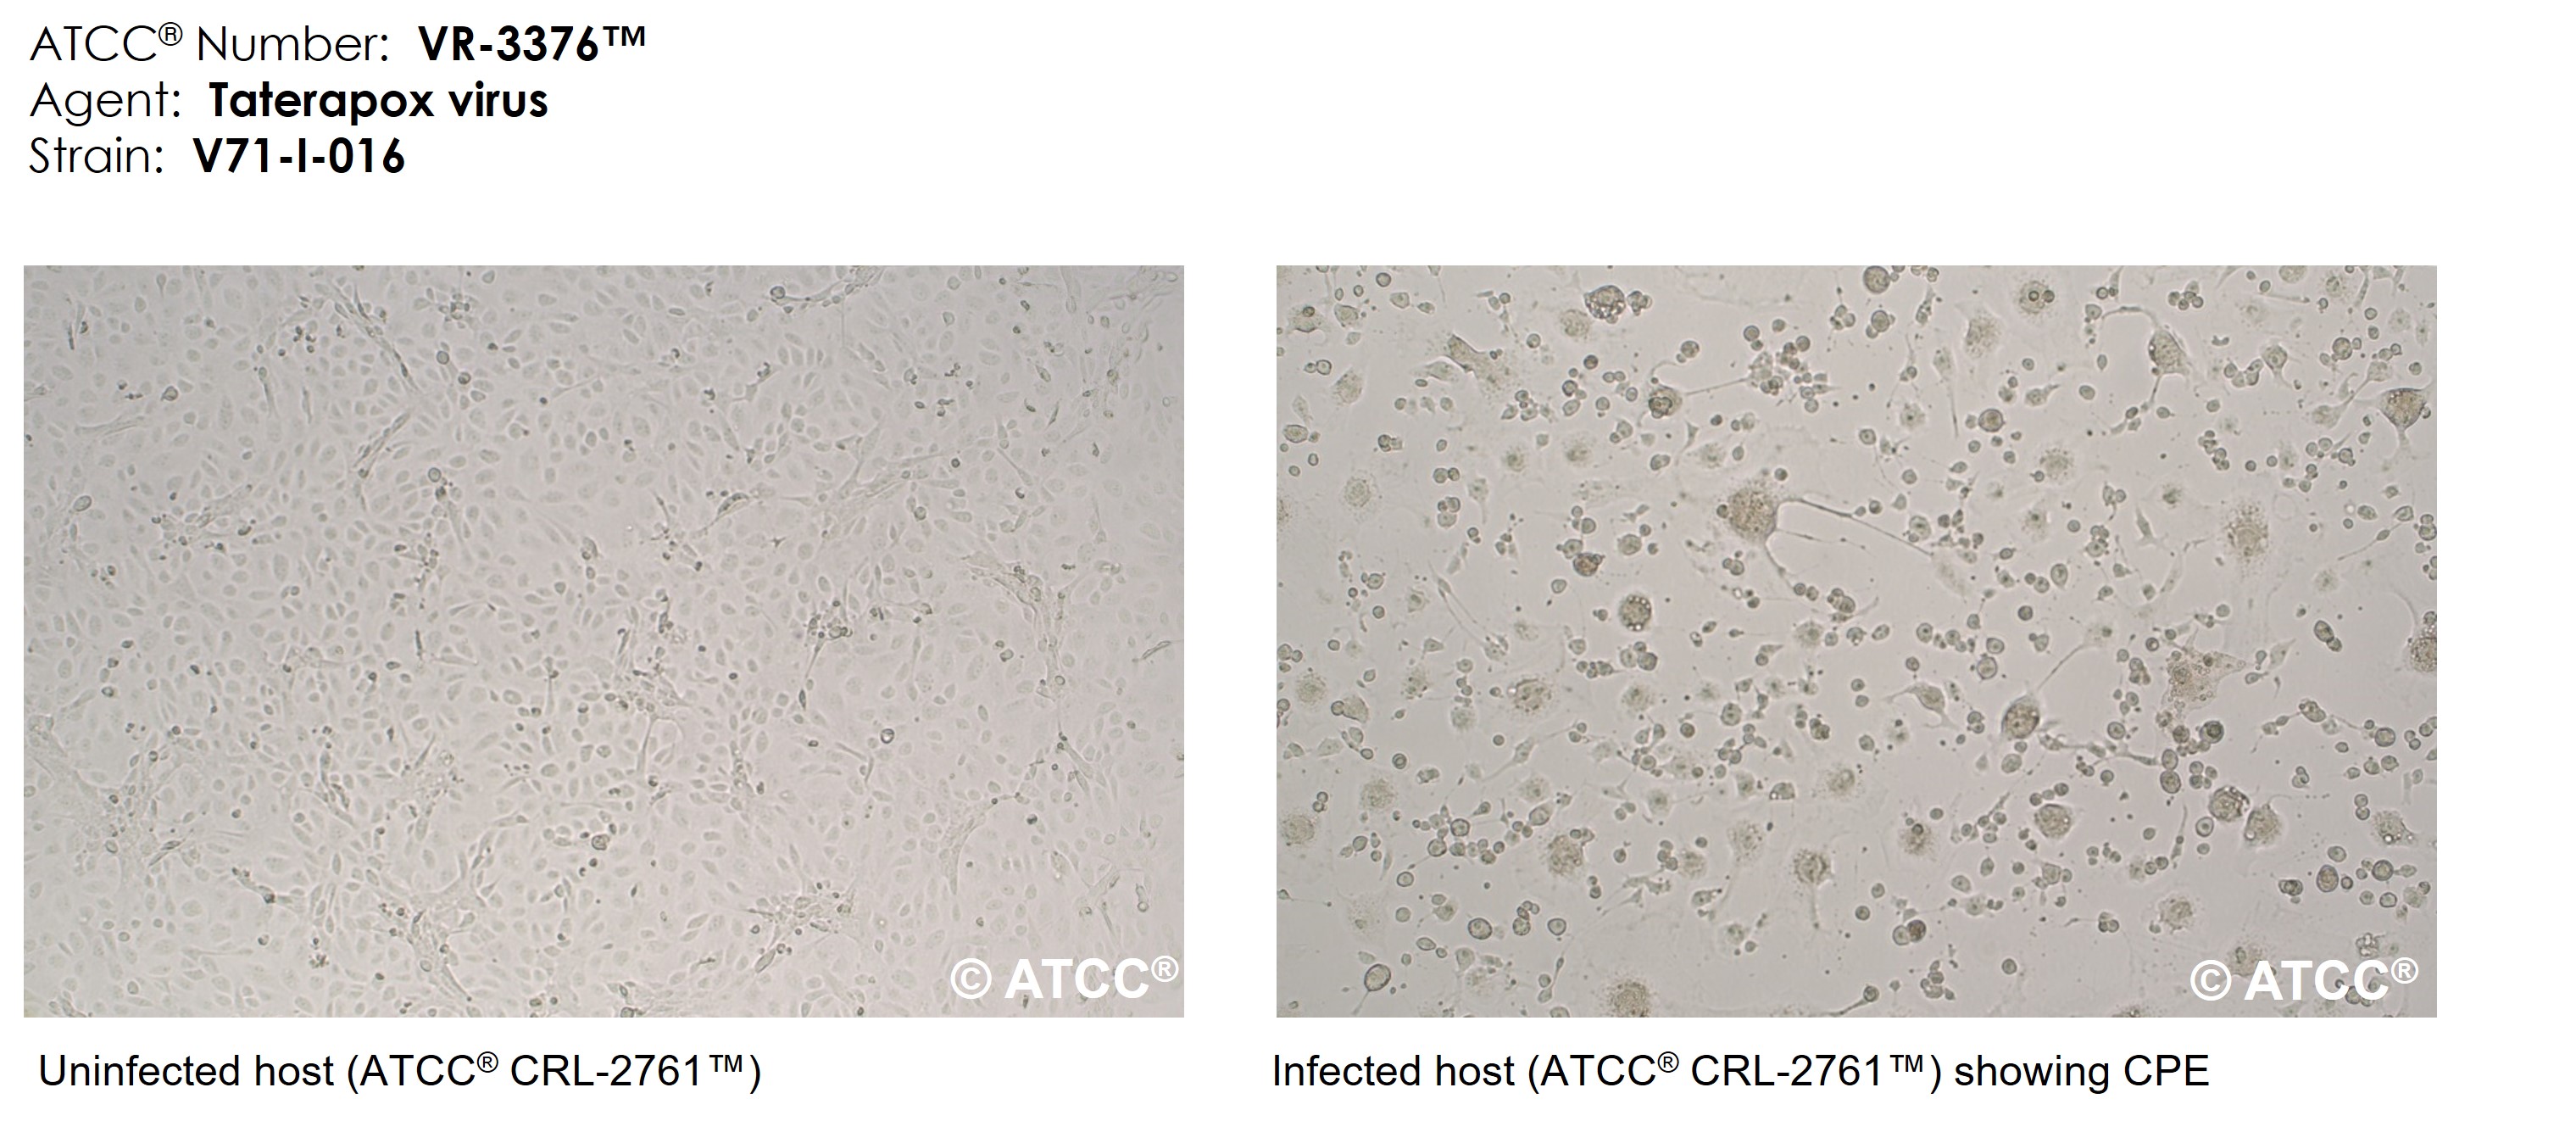 Taterapox virus strain V71-I-016 micrograph